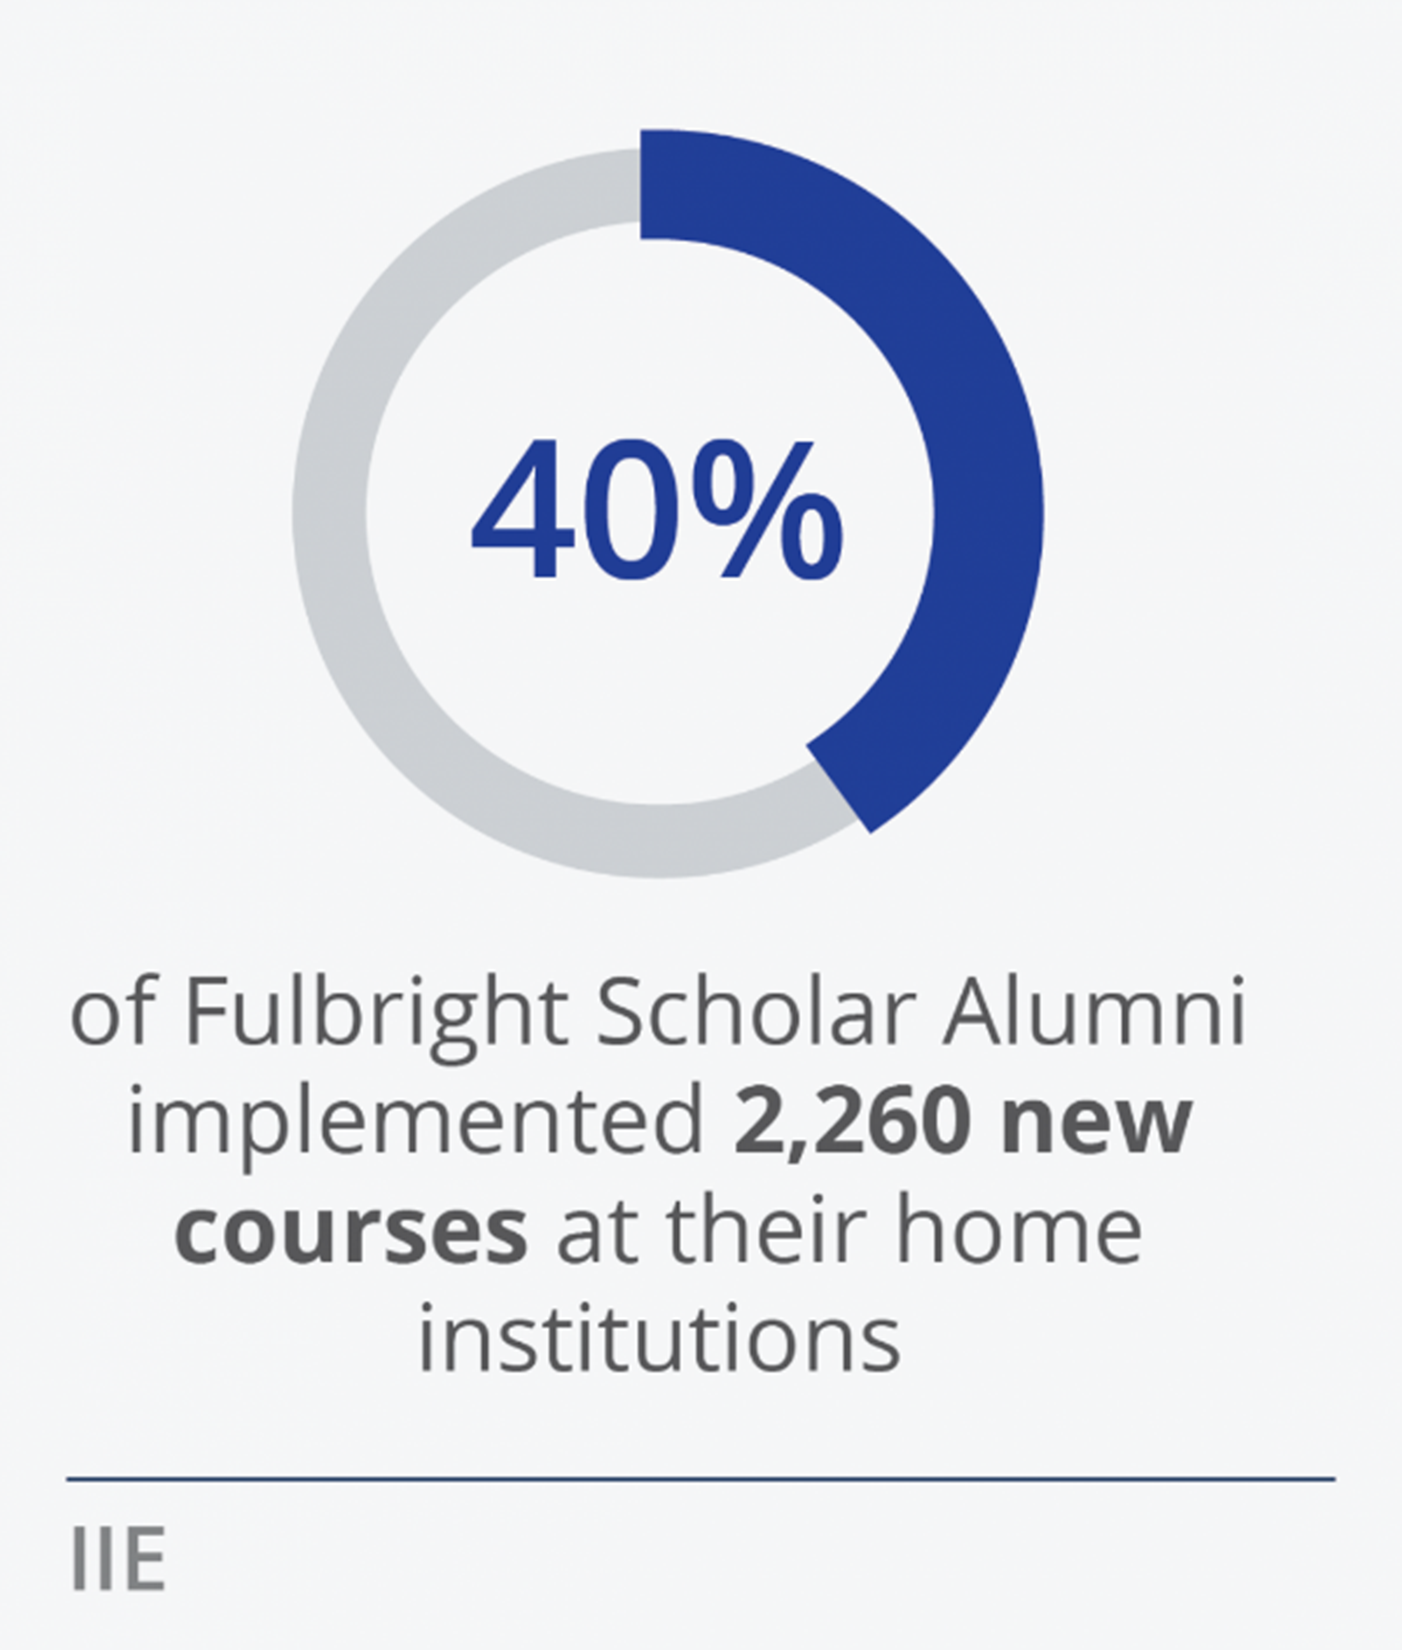 Scholar alumni pie chart